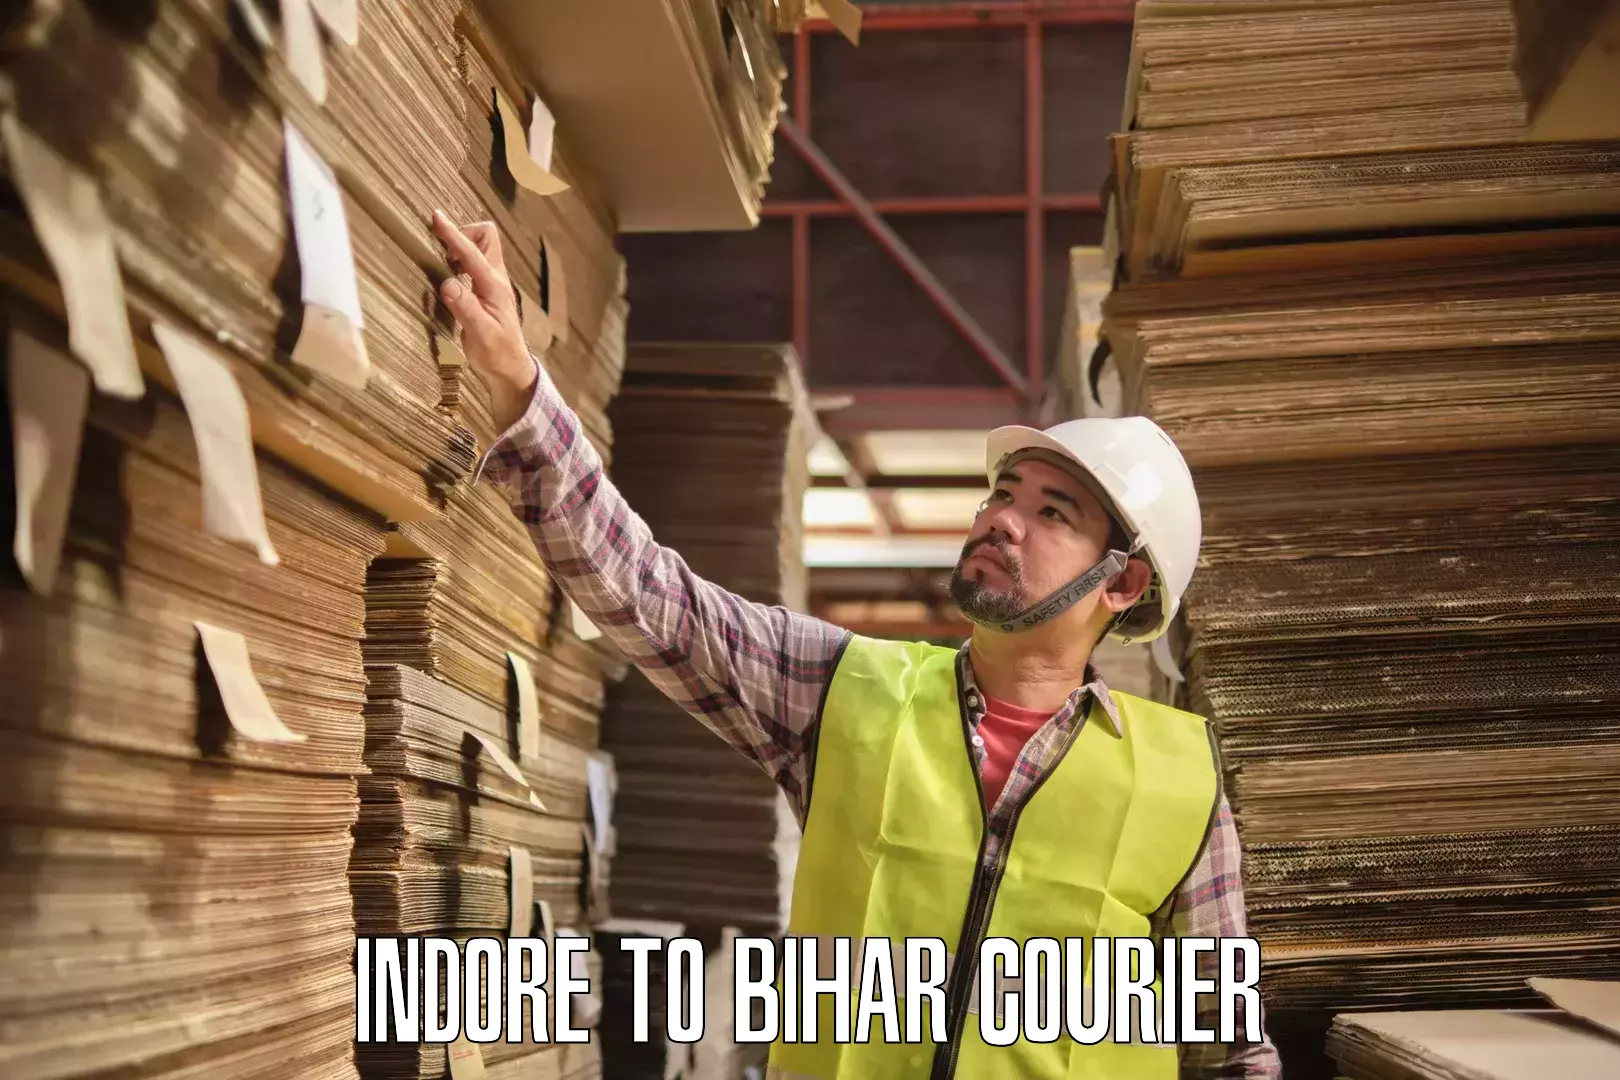 Courier service comparison Indore to Dinara